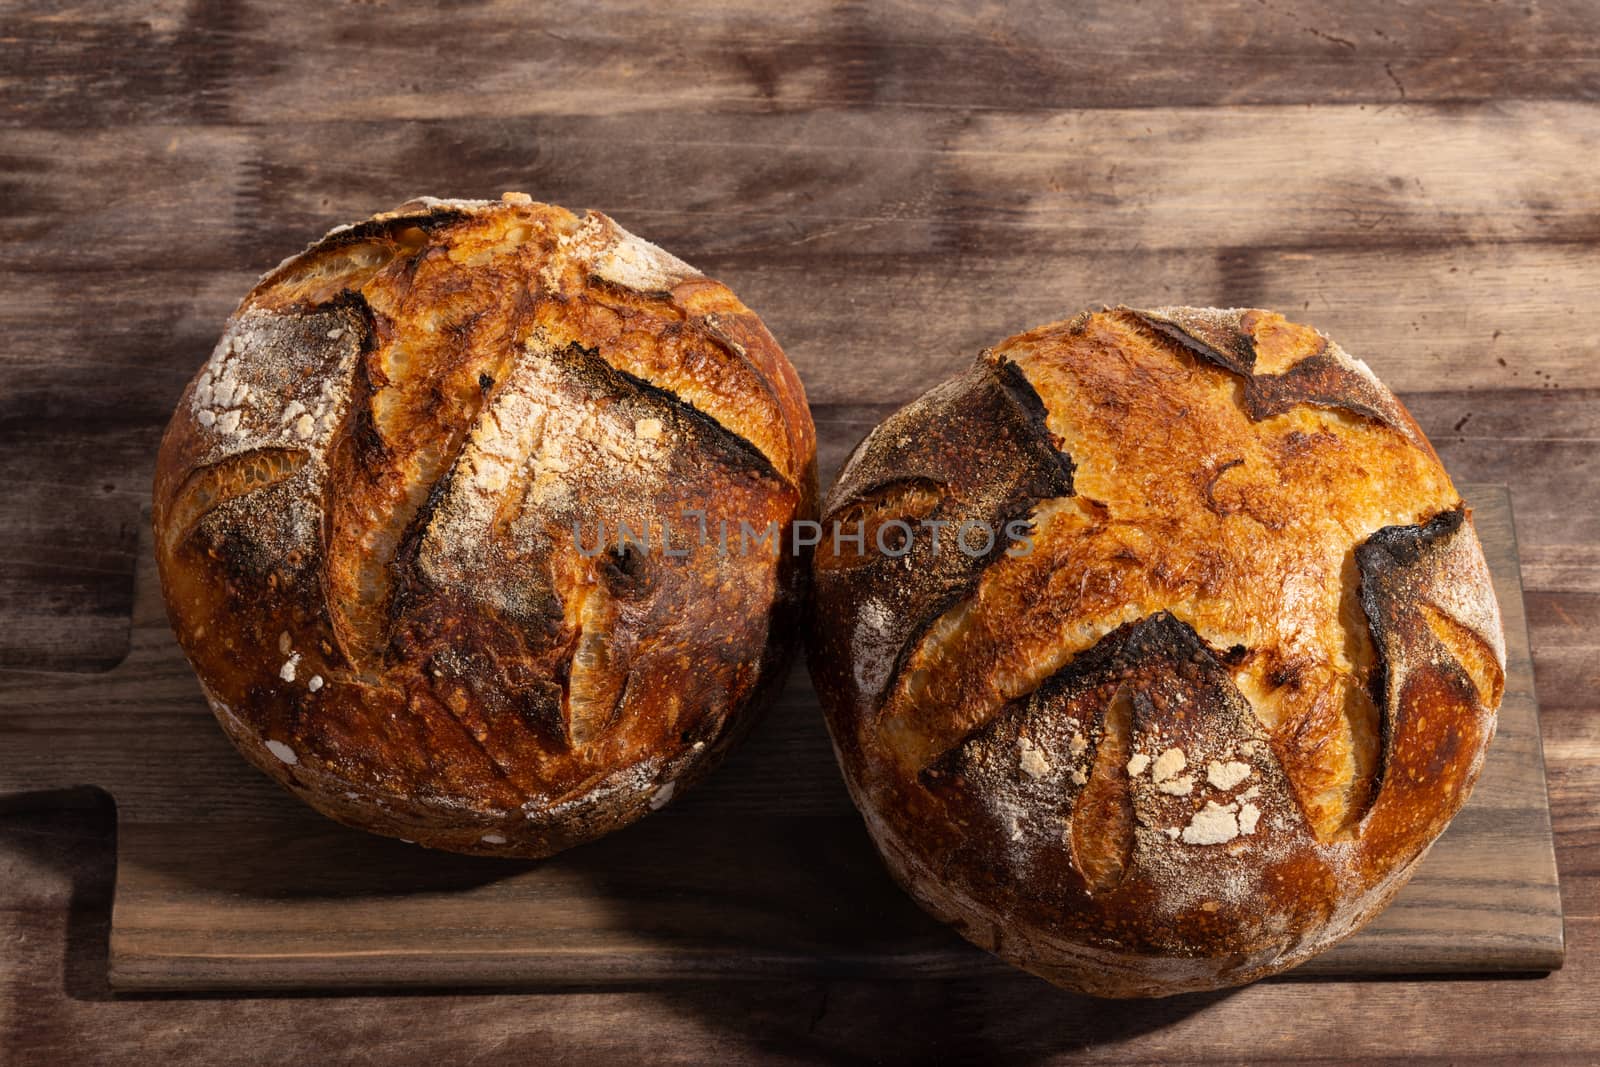 Freshly baked artisan sourdough bread loaves on a wooden board.